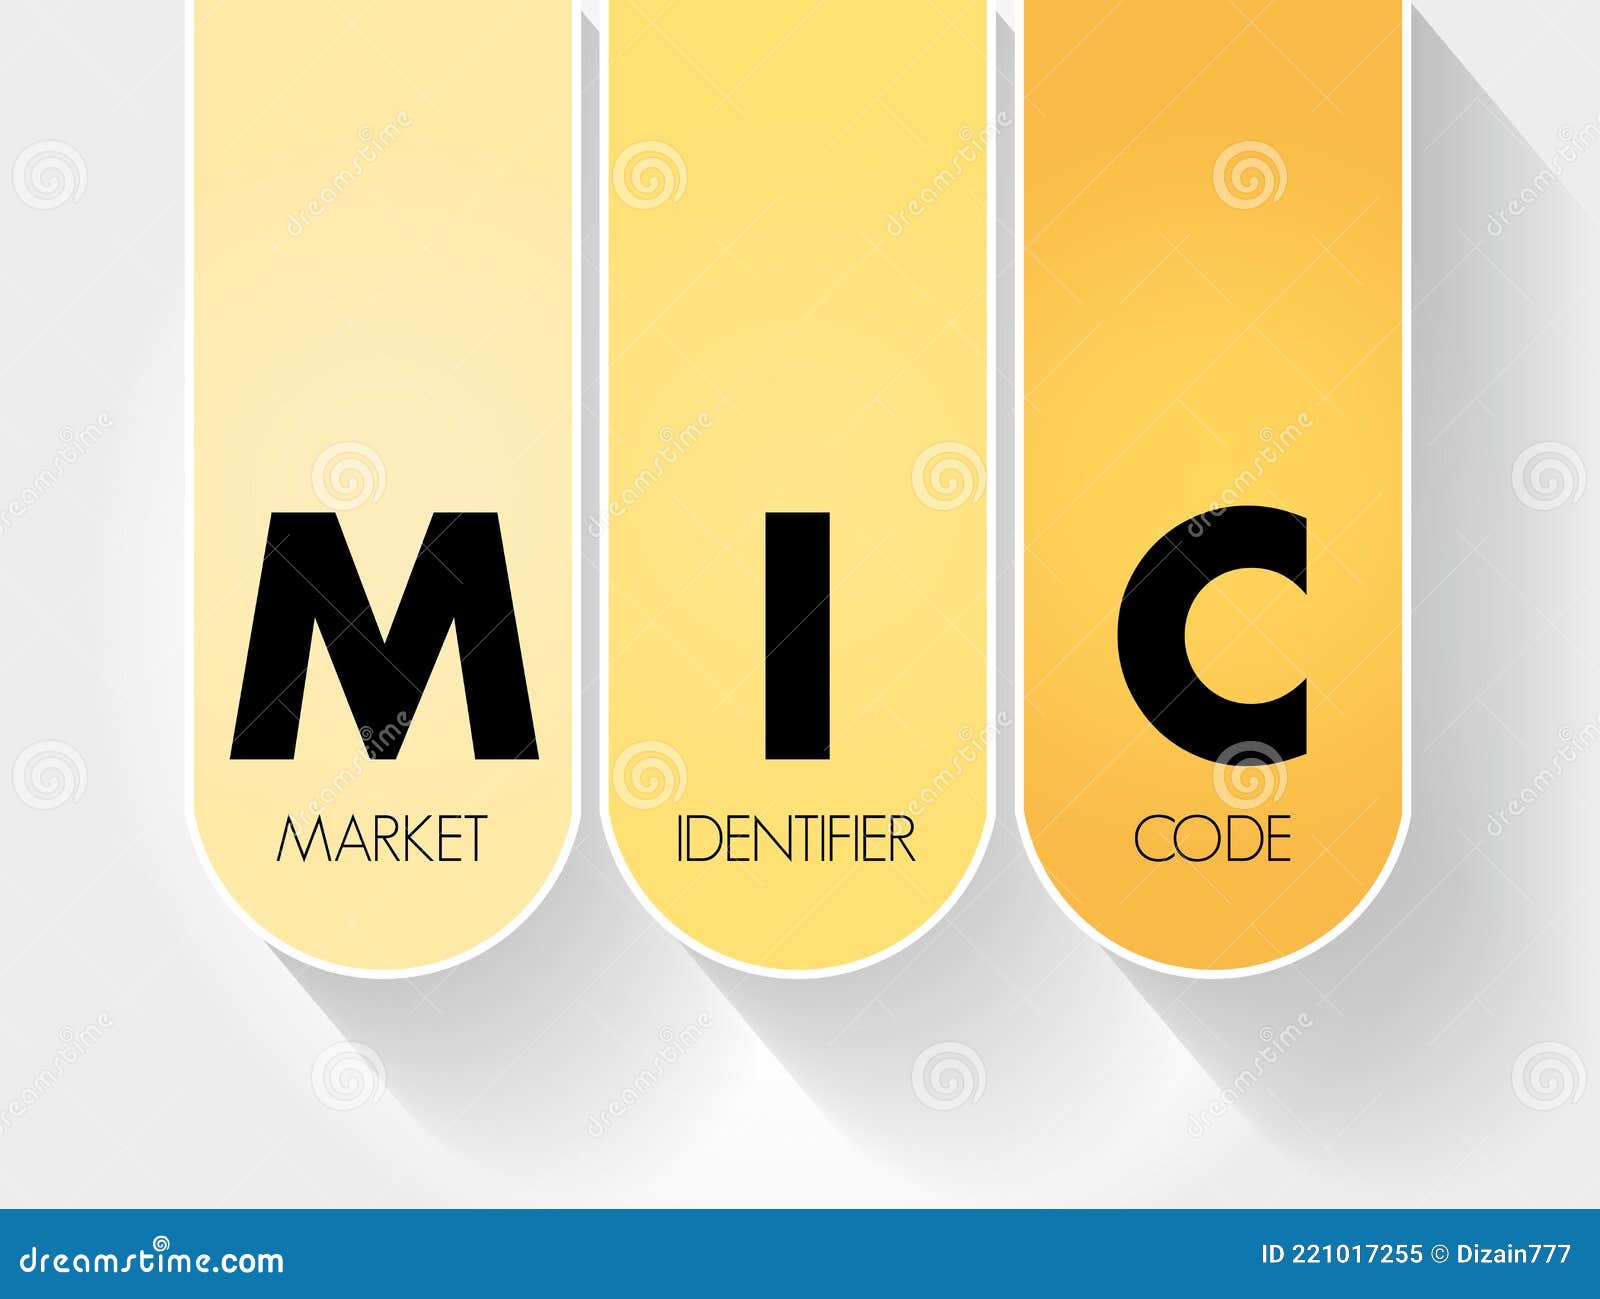 market identification code